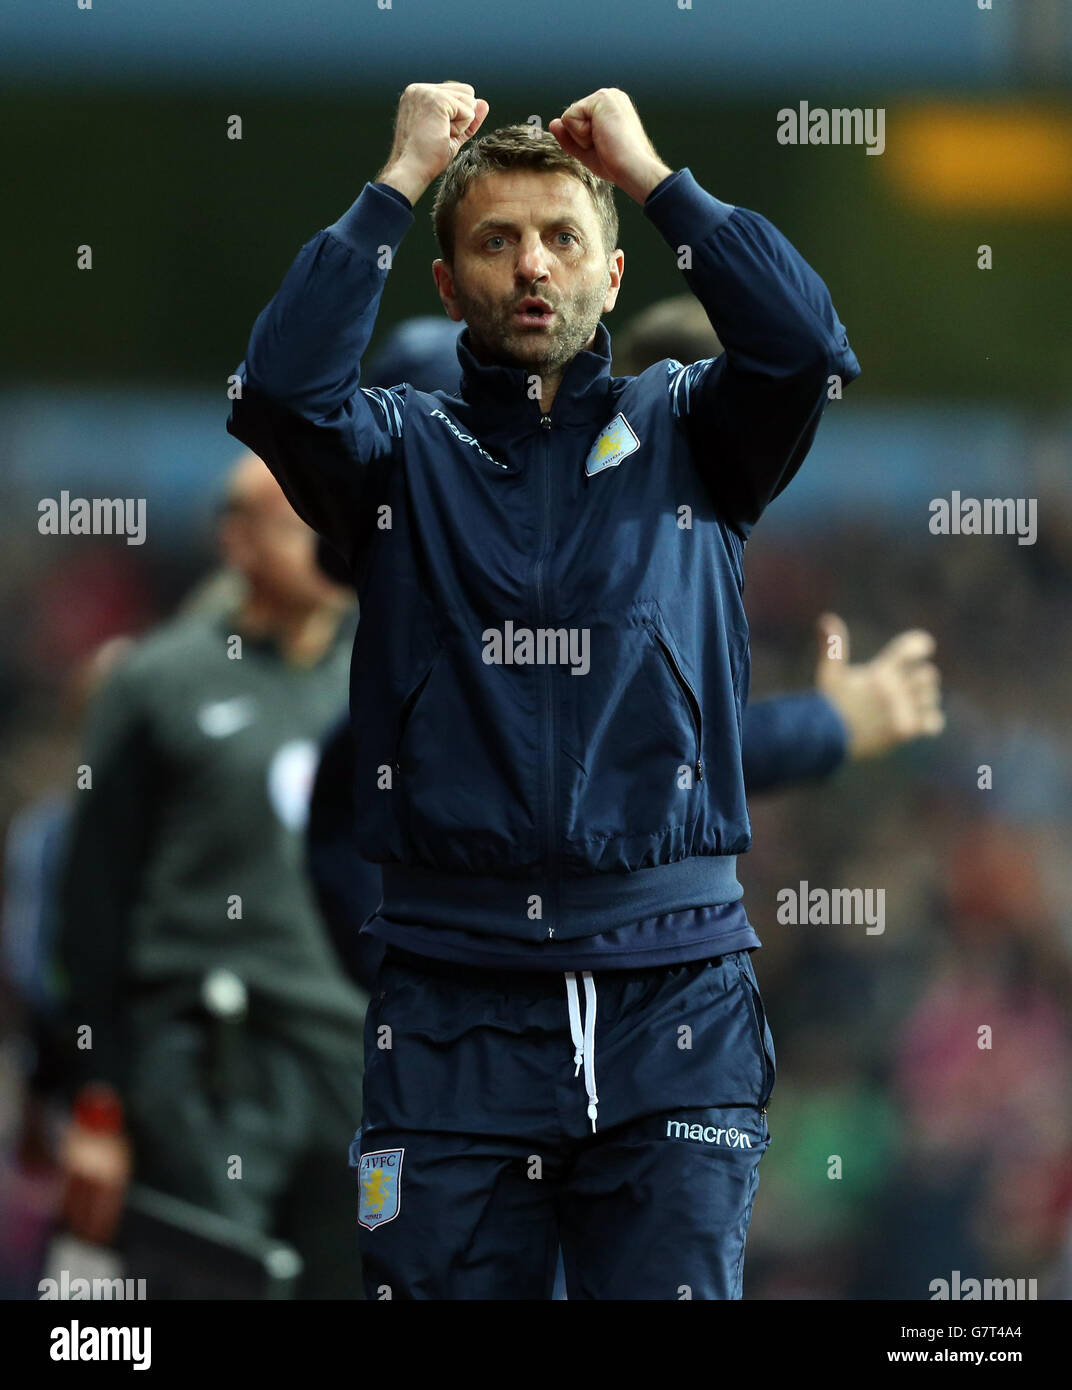 Soccer - Barclays Premier League - Aston Villa v Queens Park Rangers - Villa Park. Aston Villa manager Tim Sherwood gestures on the touchline Stock Photo